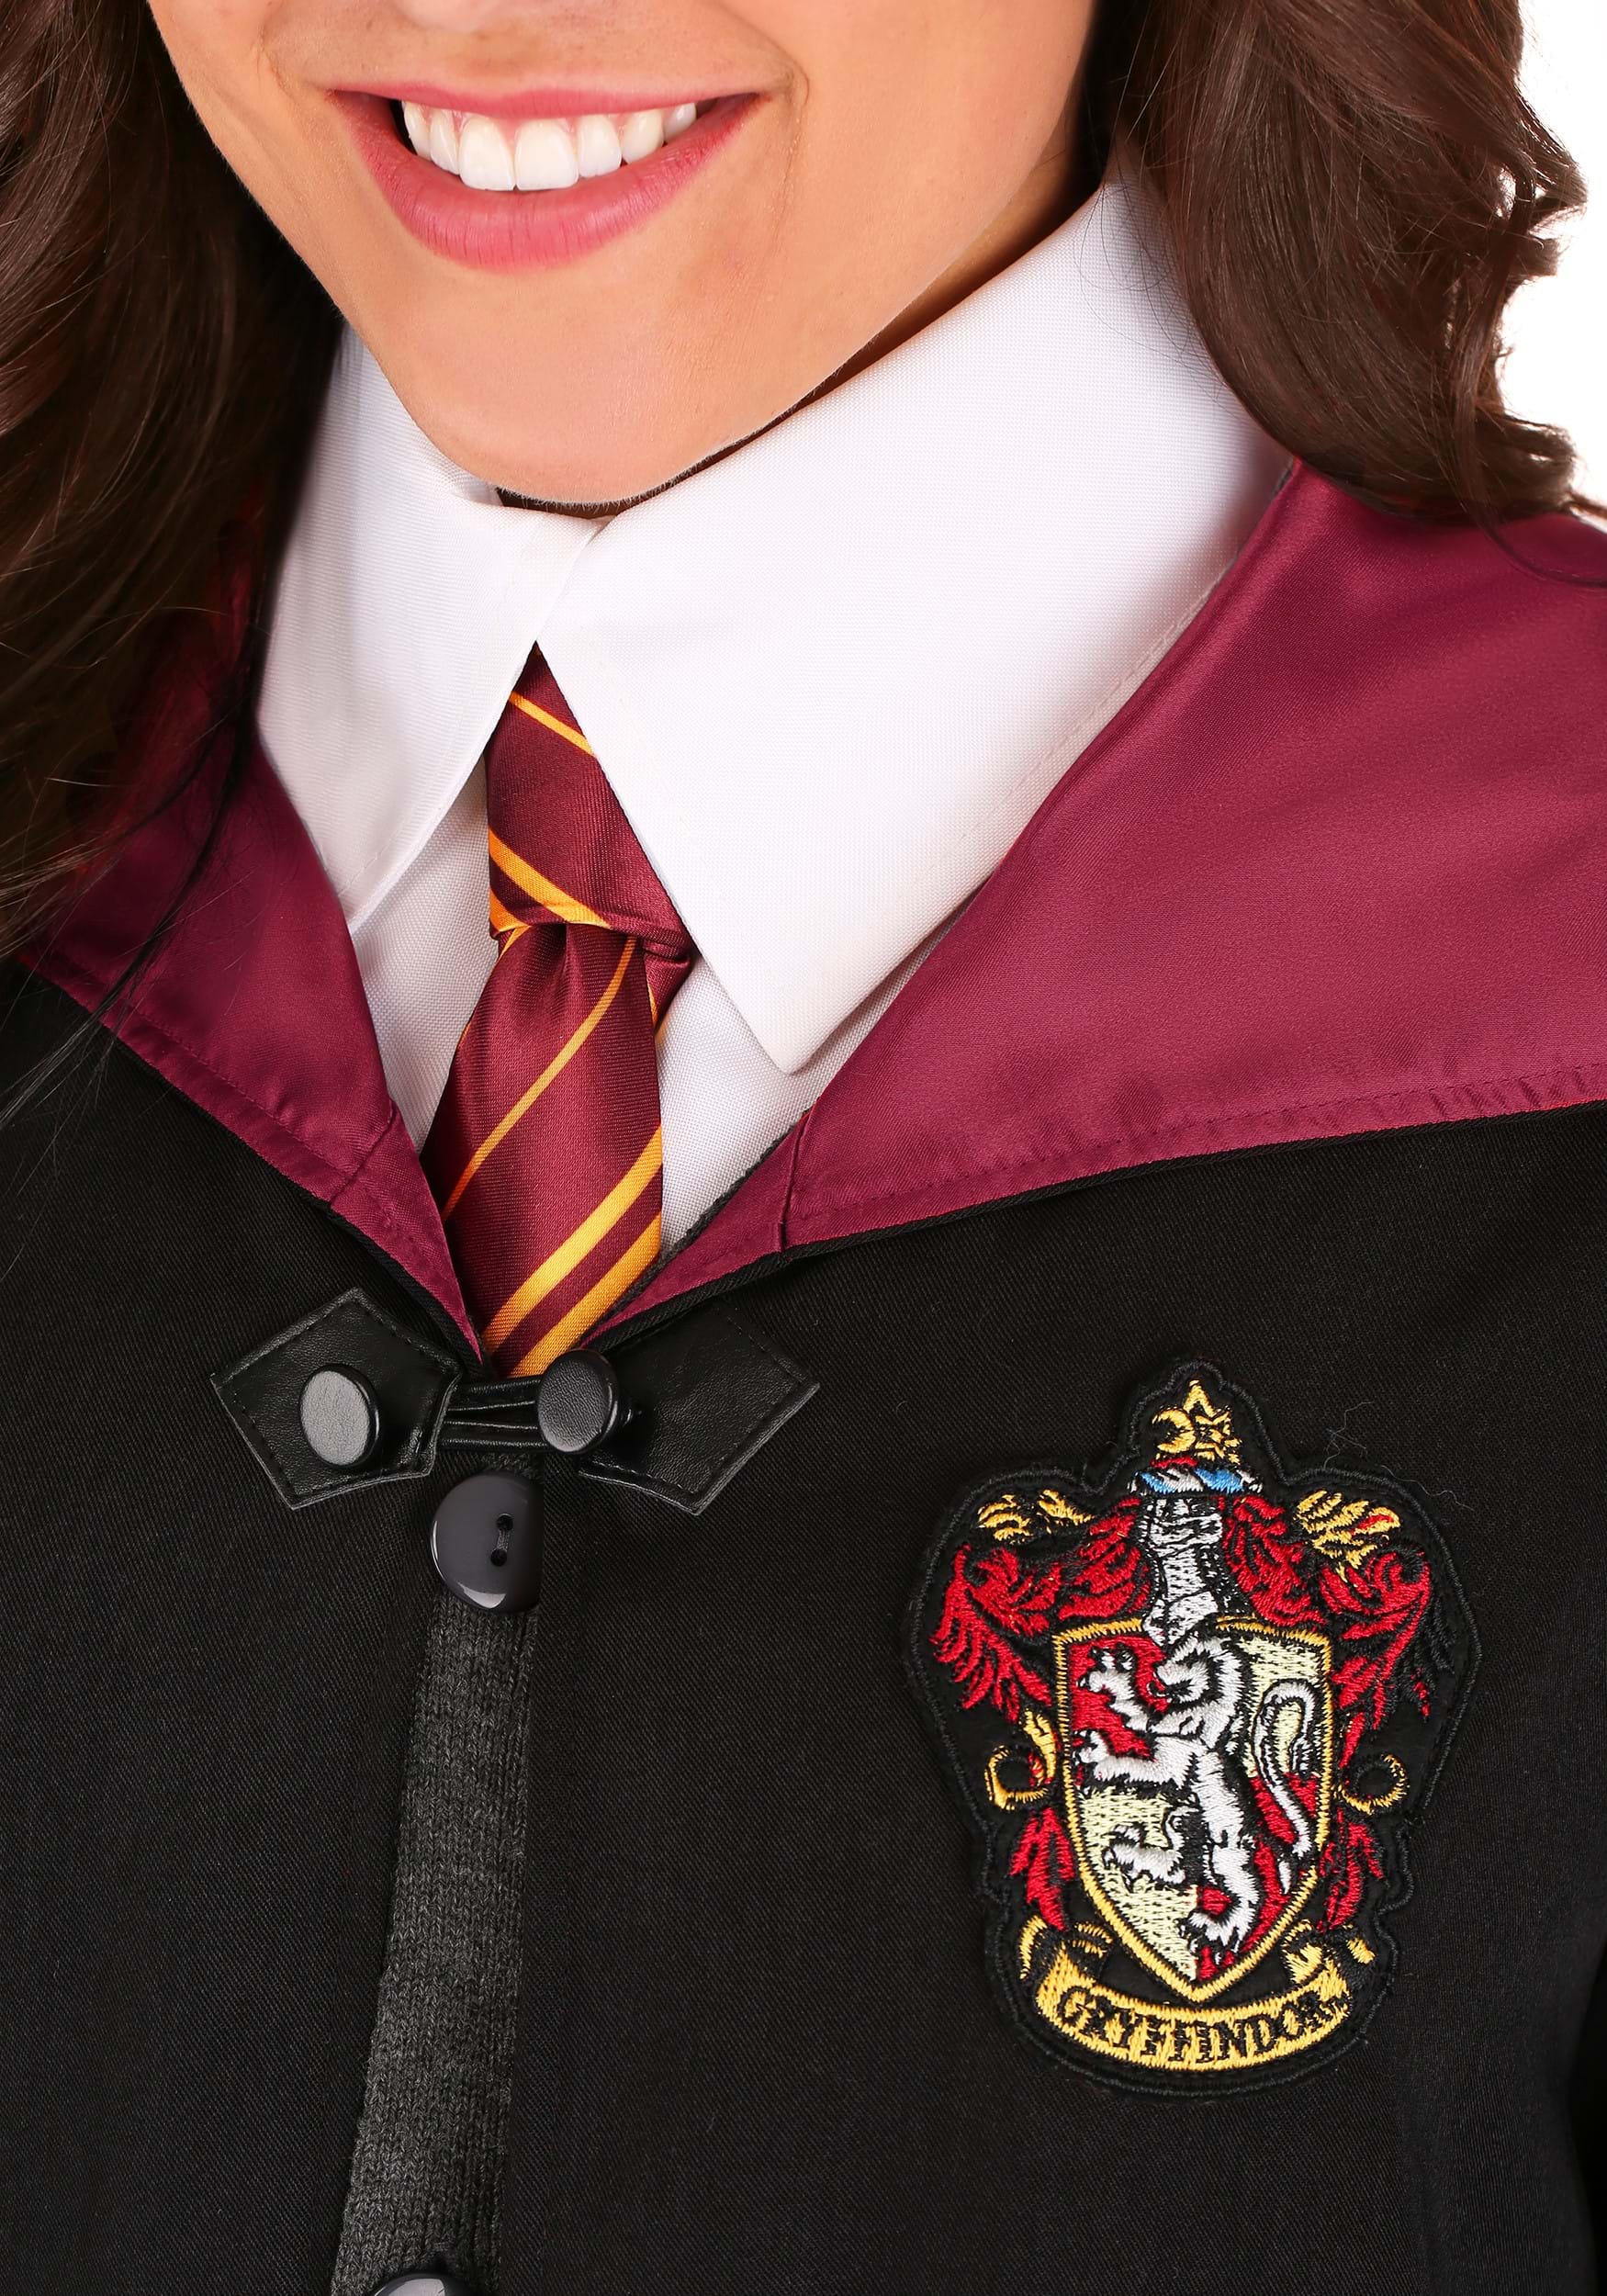 Plus Size Women's Deluxe Harry Potter Hermione Costume